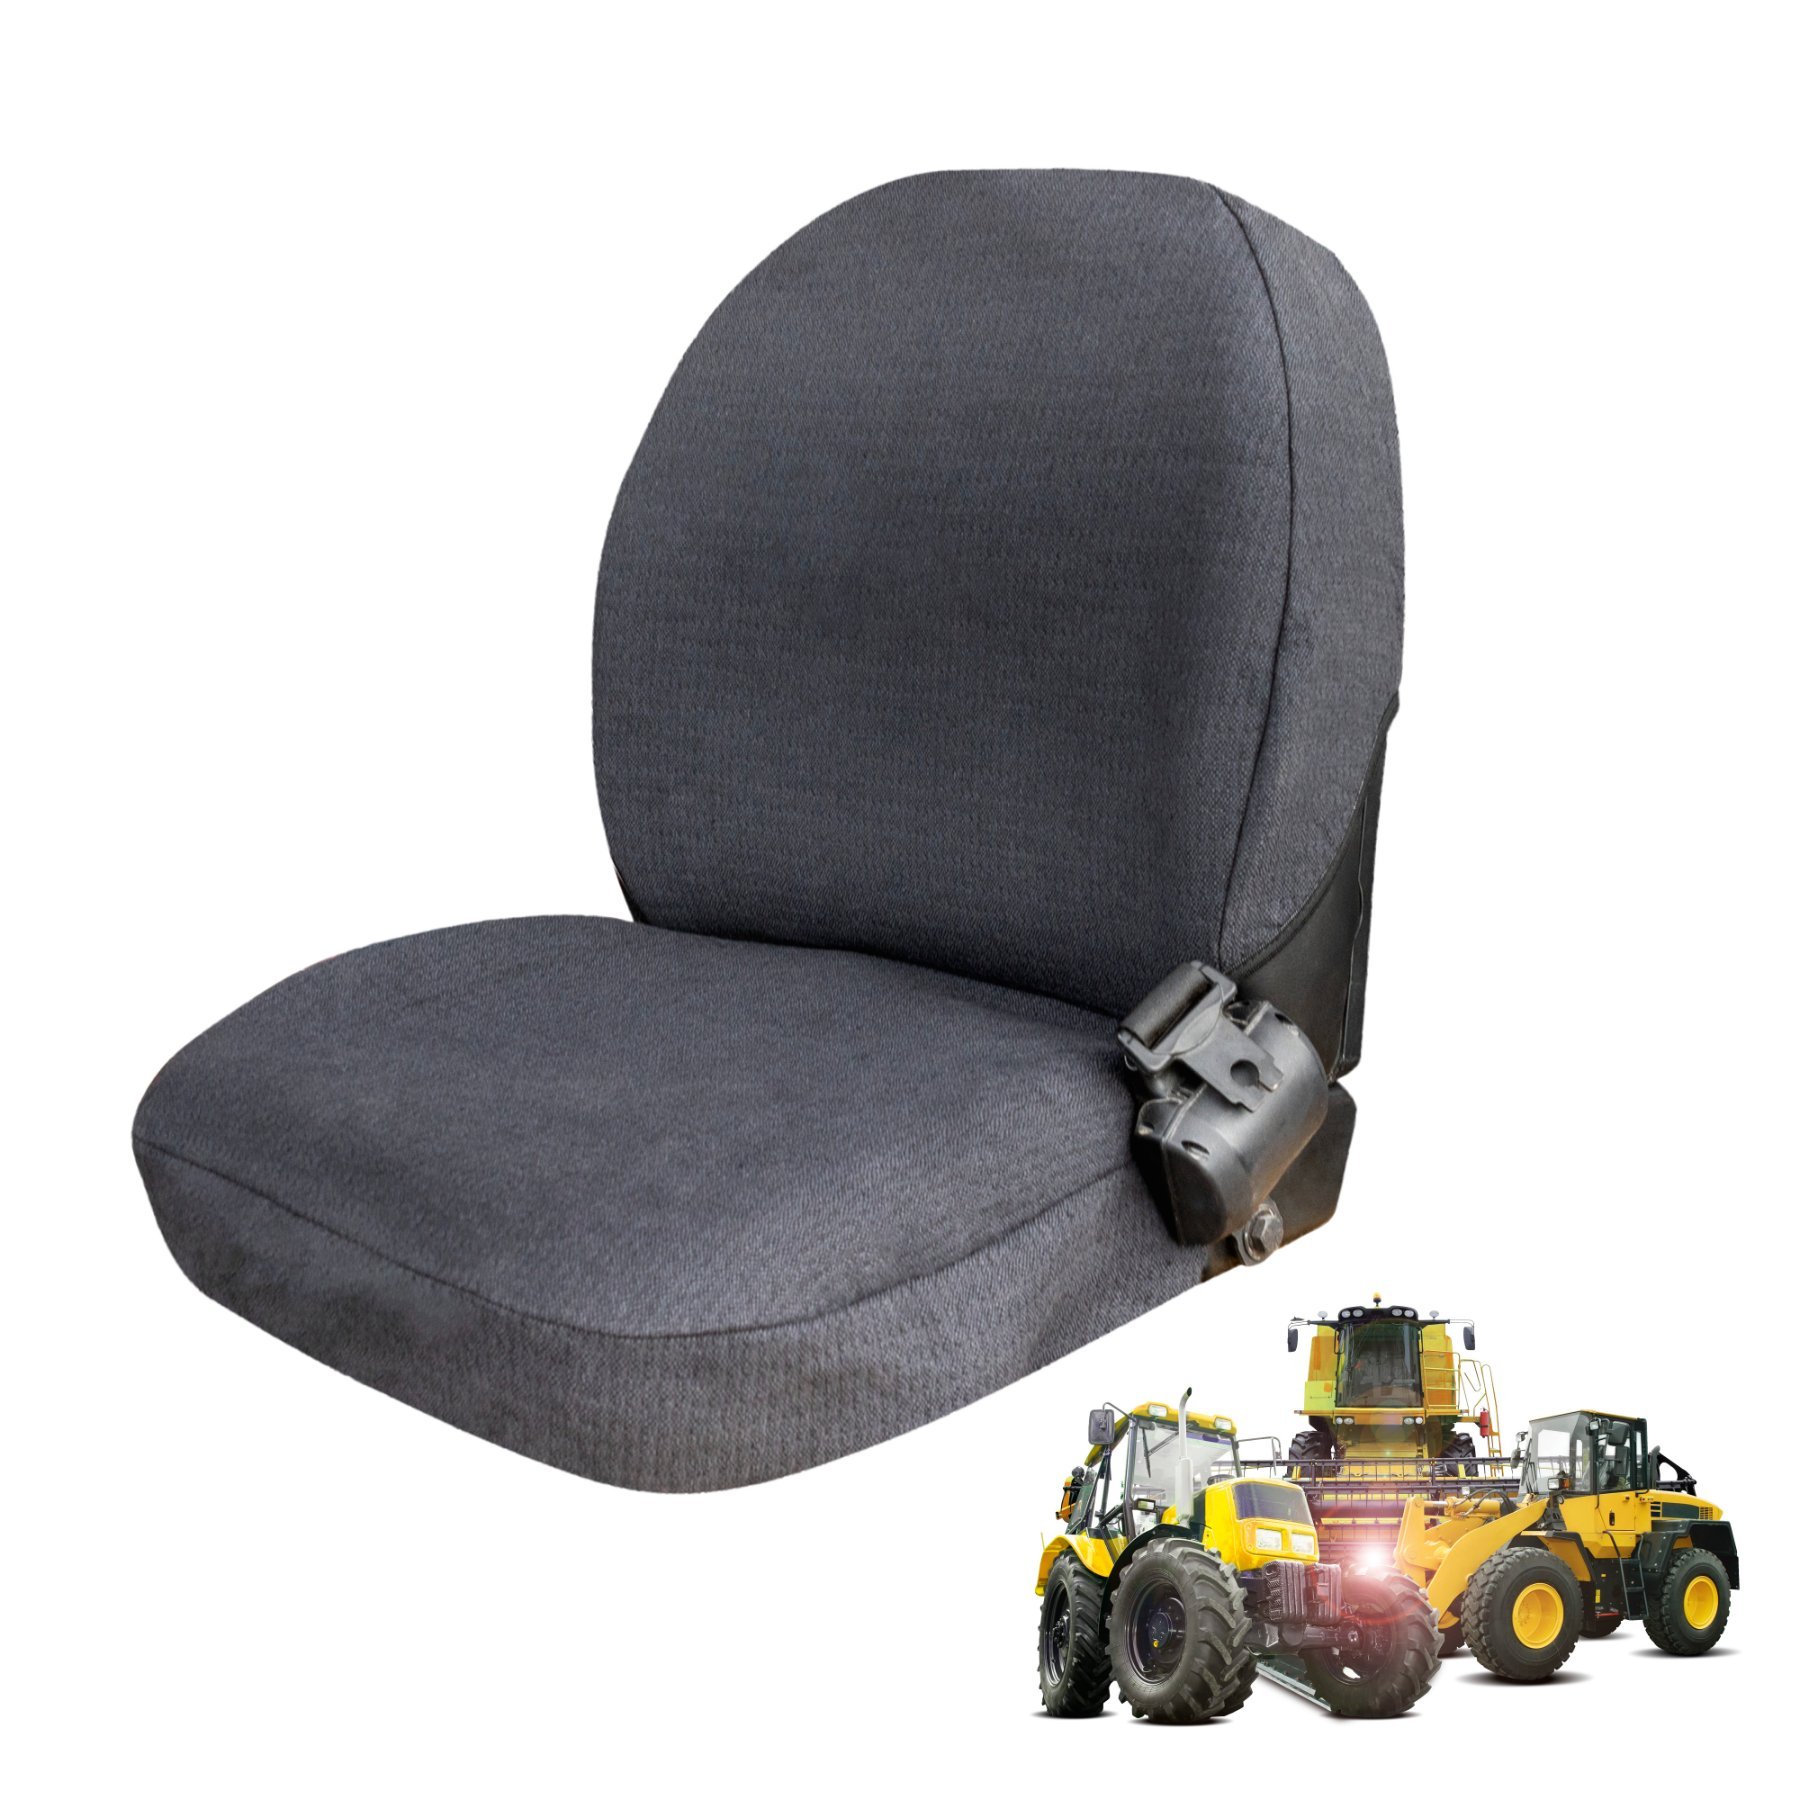 Seat cover small tractors, municipal tractors, size 4